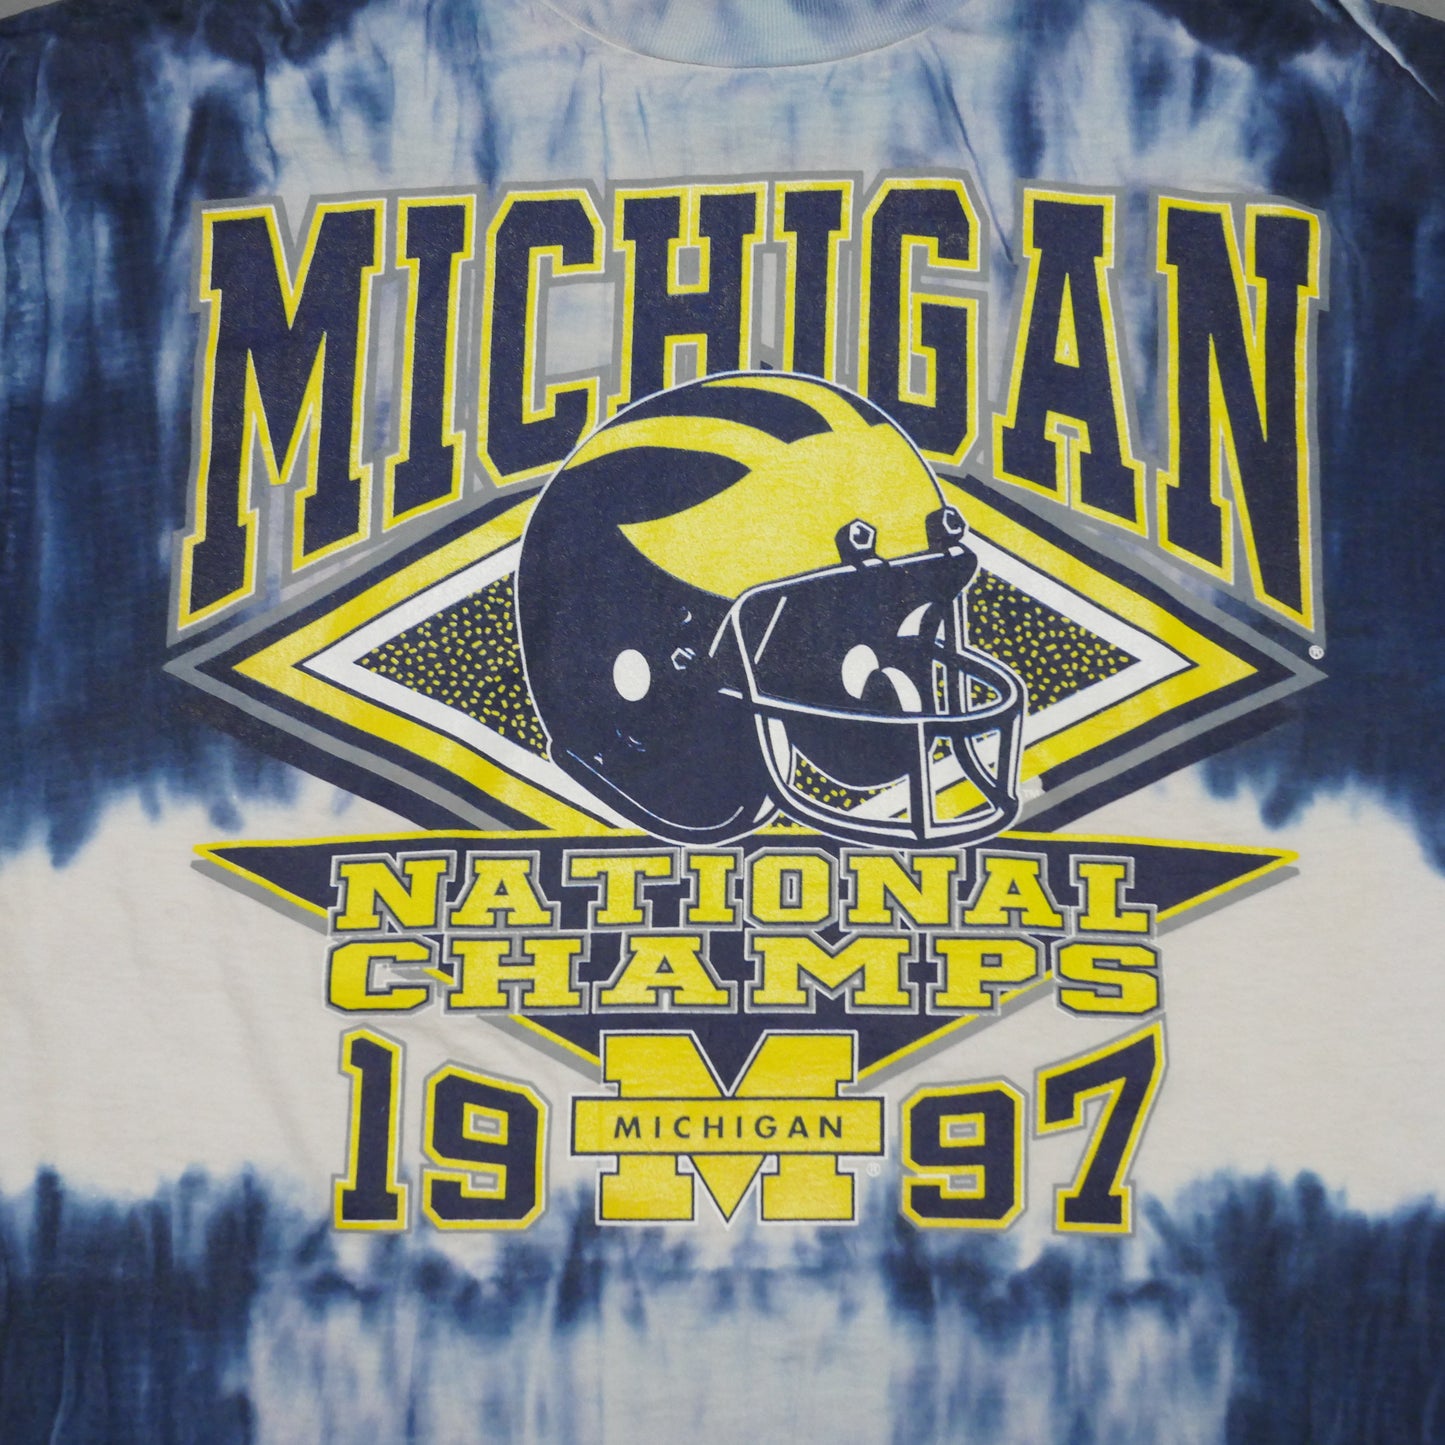 Michigan National Champs 1997 Tie Dye Shirt - Large